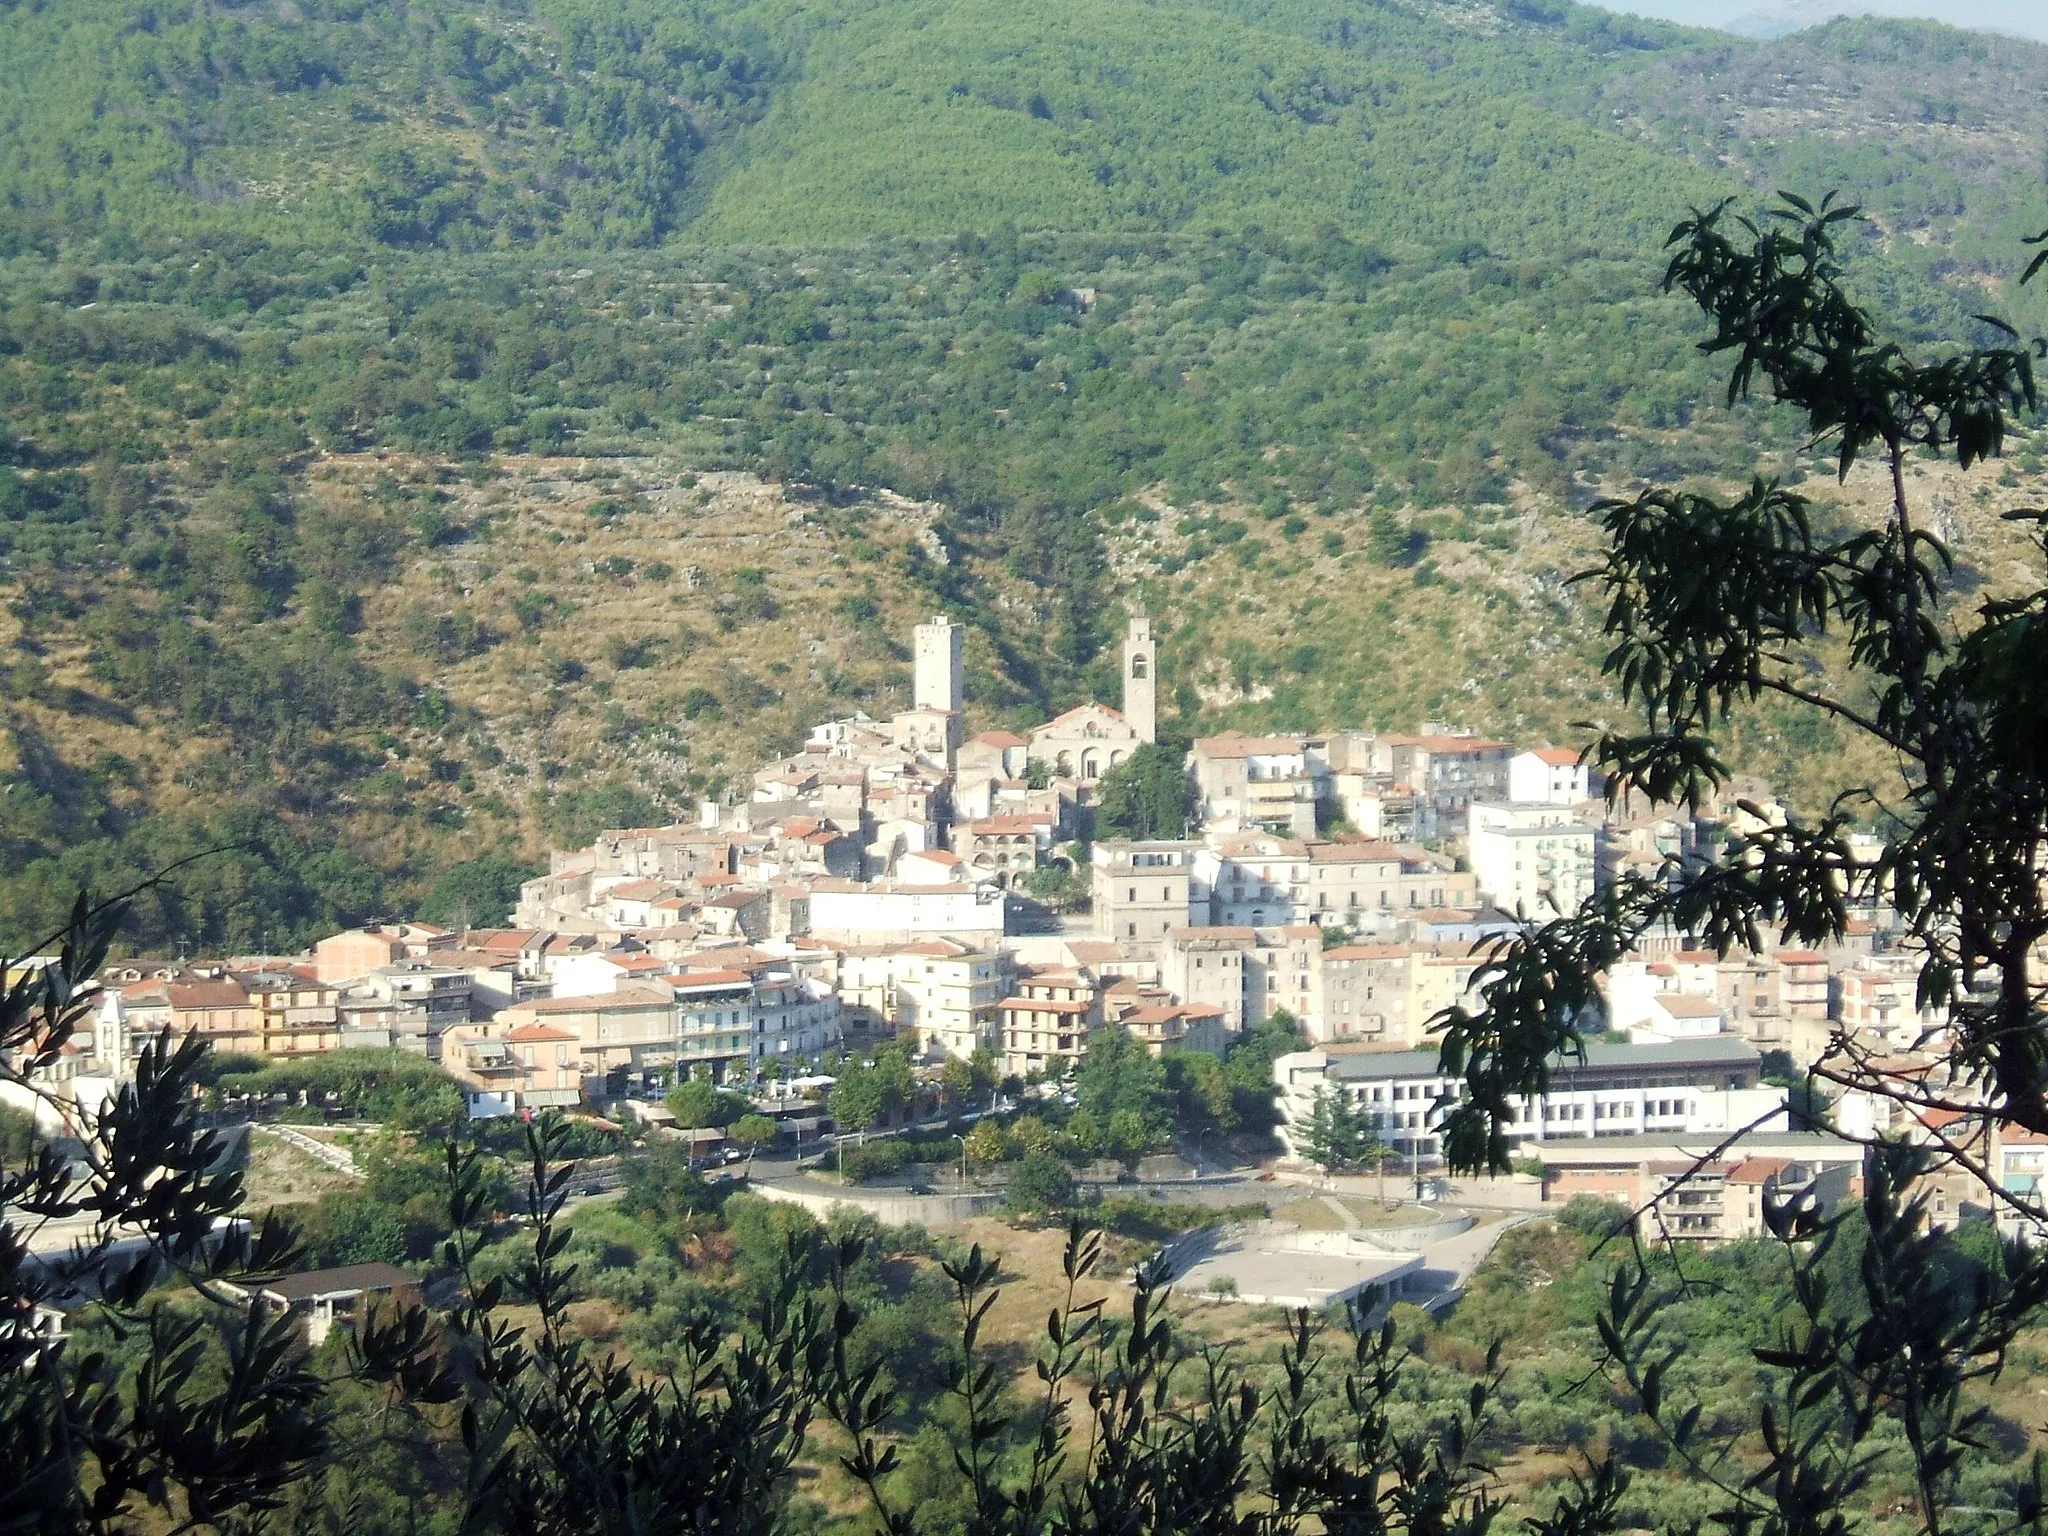 Image of Castelforte